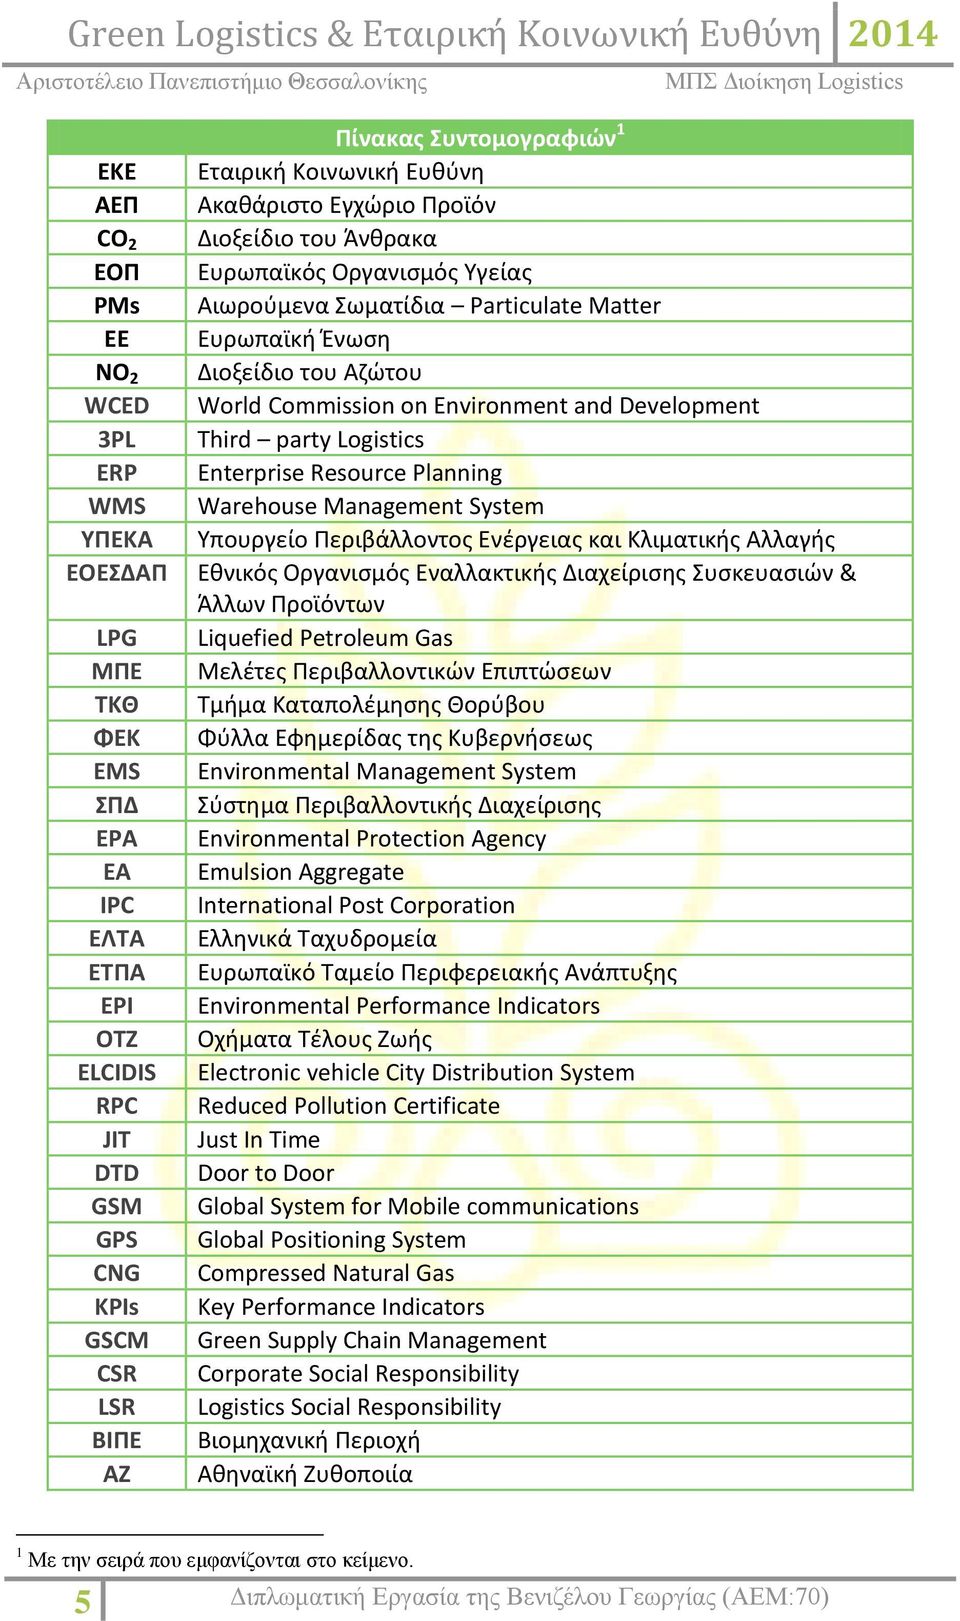 Environment and Development Third party Logistics Enterprise Resource Planning Warehouse Management System Υπουργείο Περιβάλλοντος Ενέργειας και Κλιματικής Αλλαγής Εθνικός Οργανισμός Εναλλακτικής